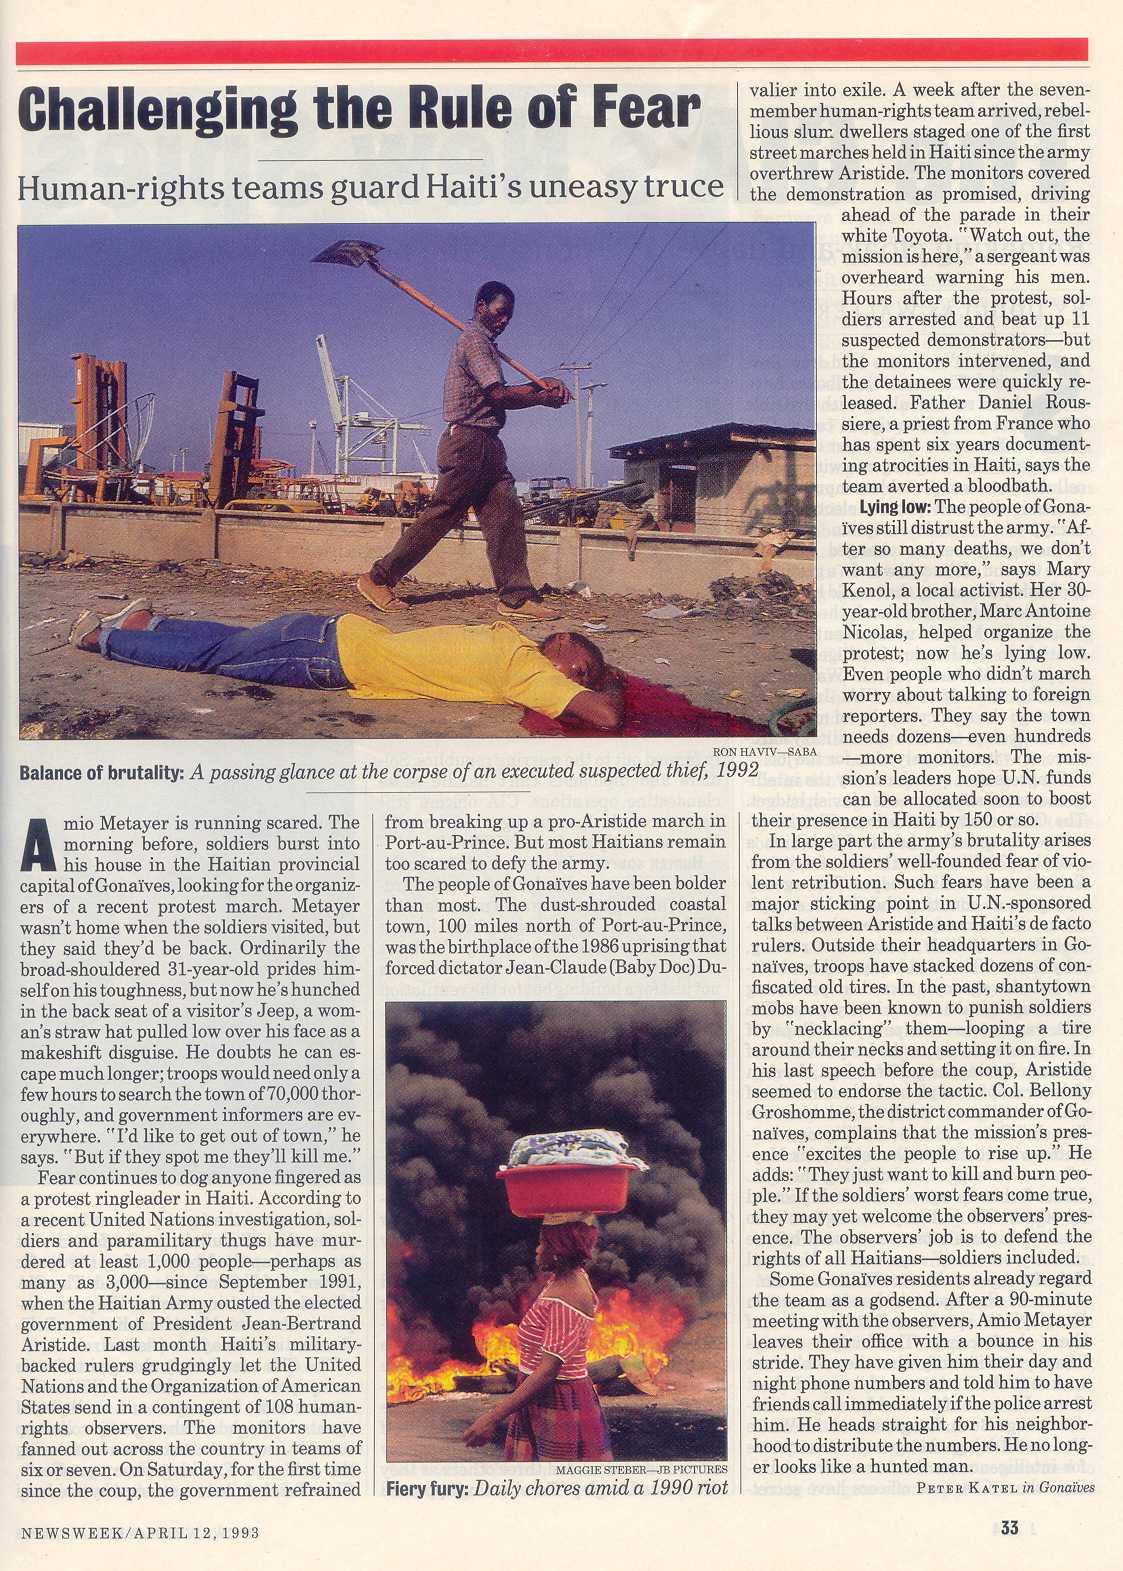 Peter Katel in Gonaives, Haiti – NEWSWEEK Magazine (1993)